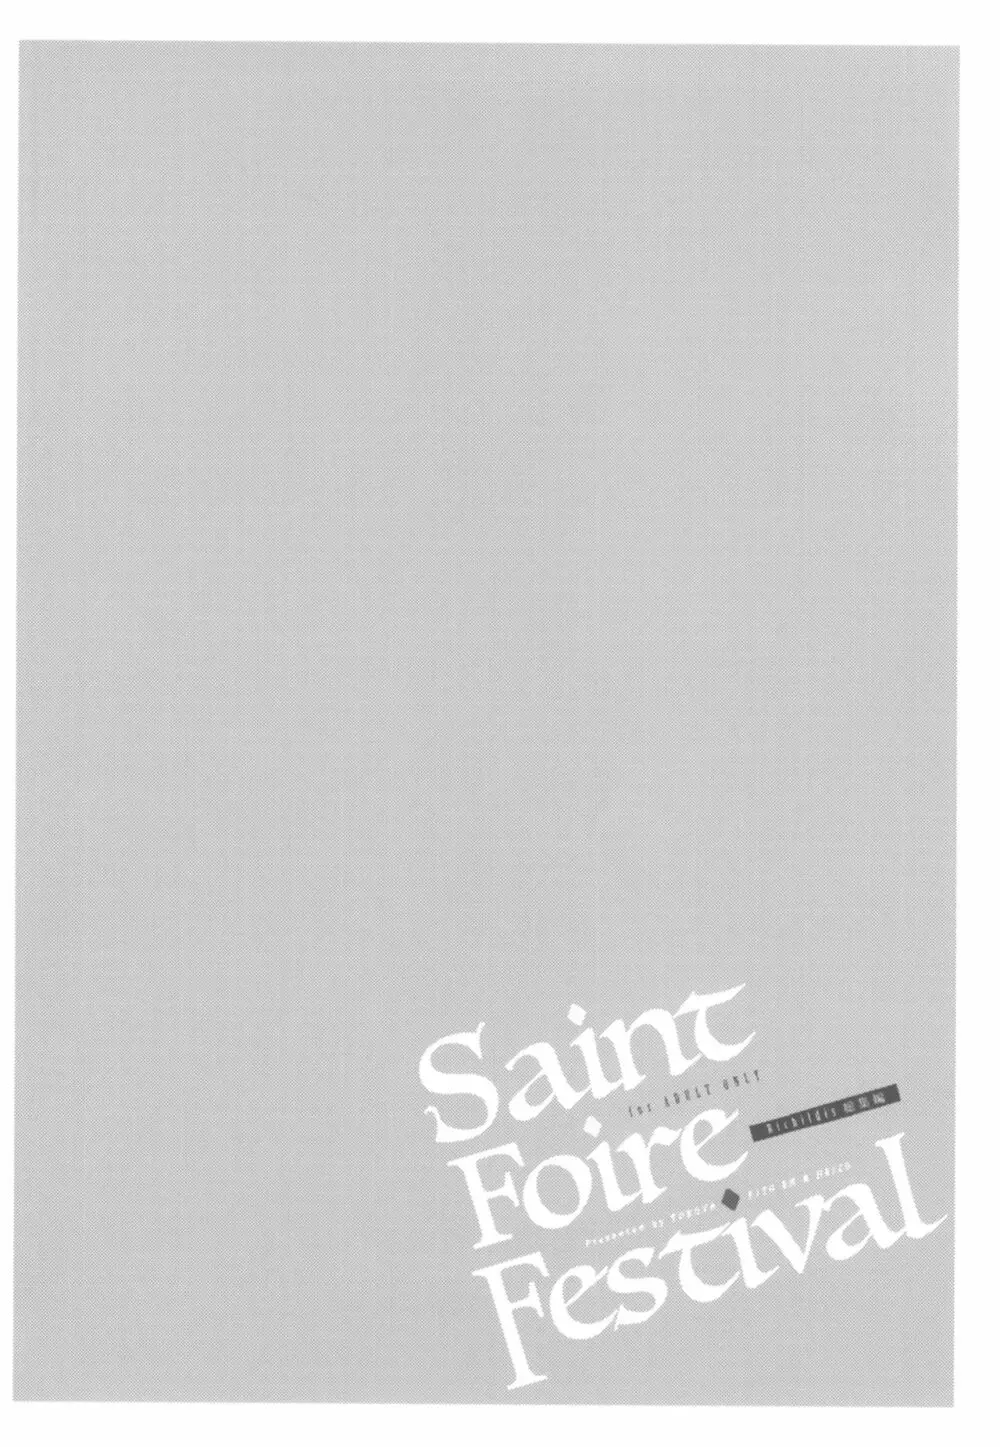 Saint Foire Festival Richildis総集編 5ページ